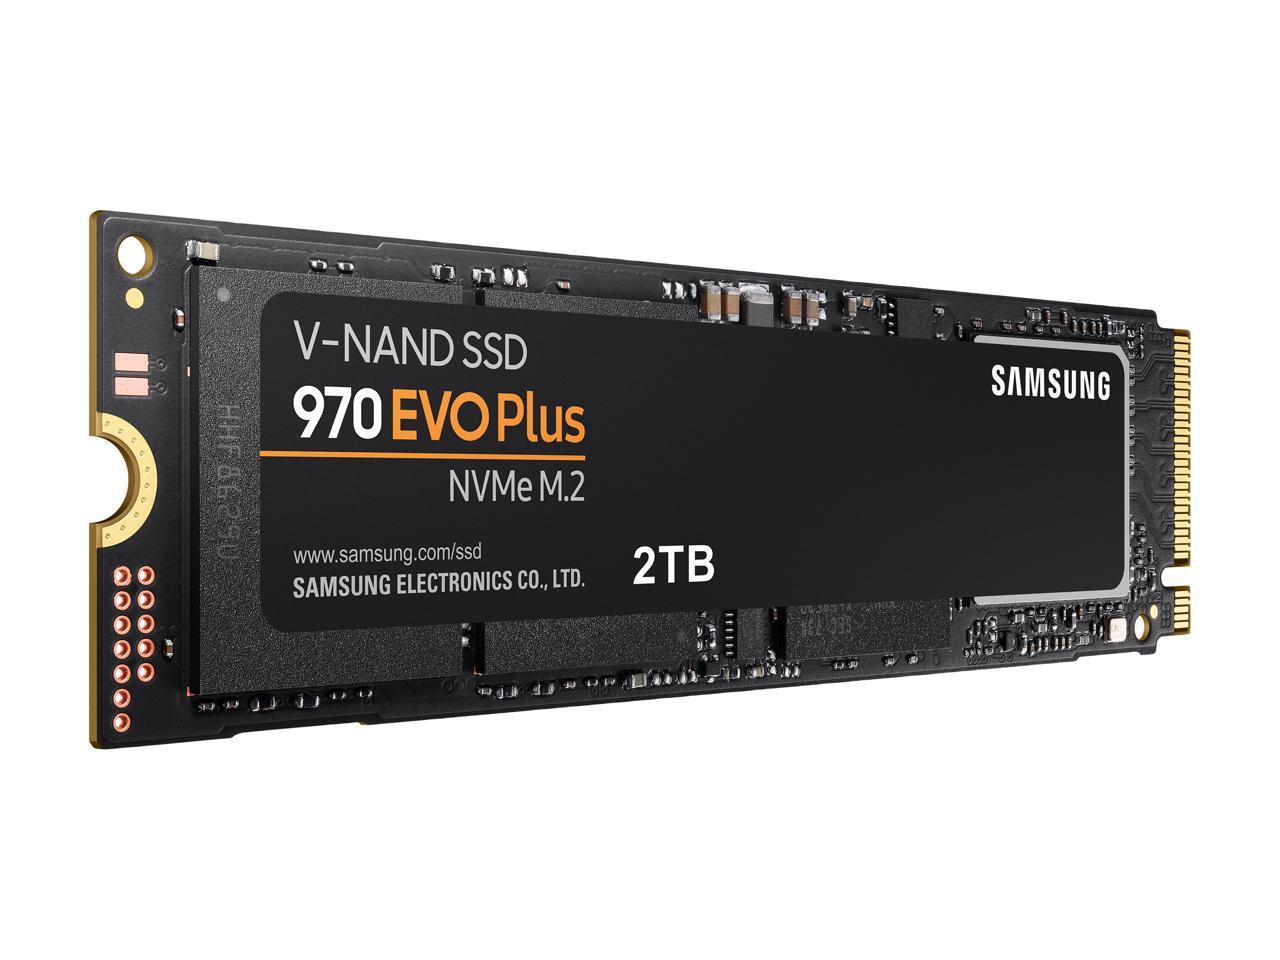 2TB Samsung EVO Plus NVMe SSD @Newegg $120